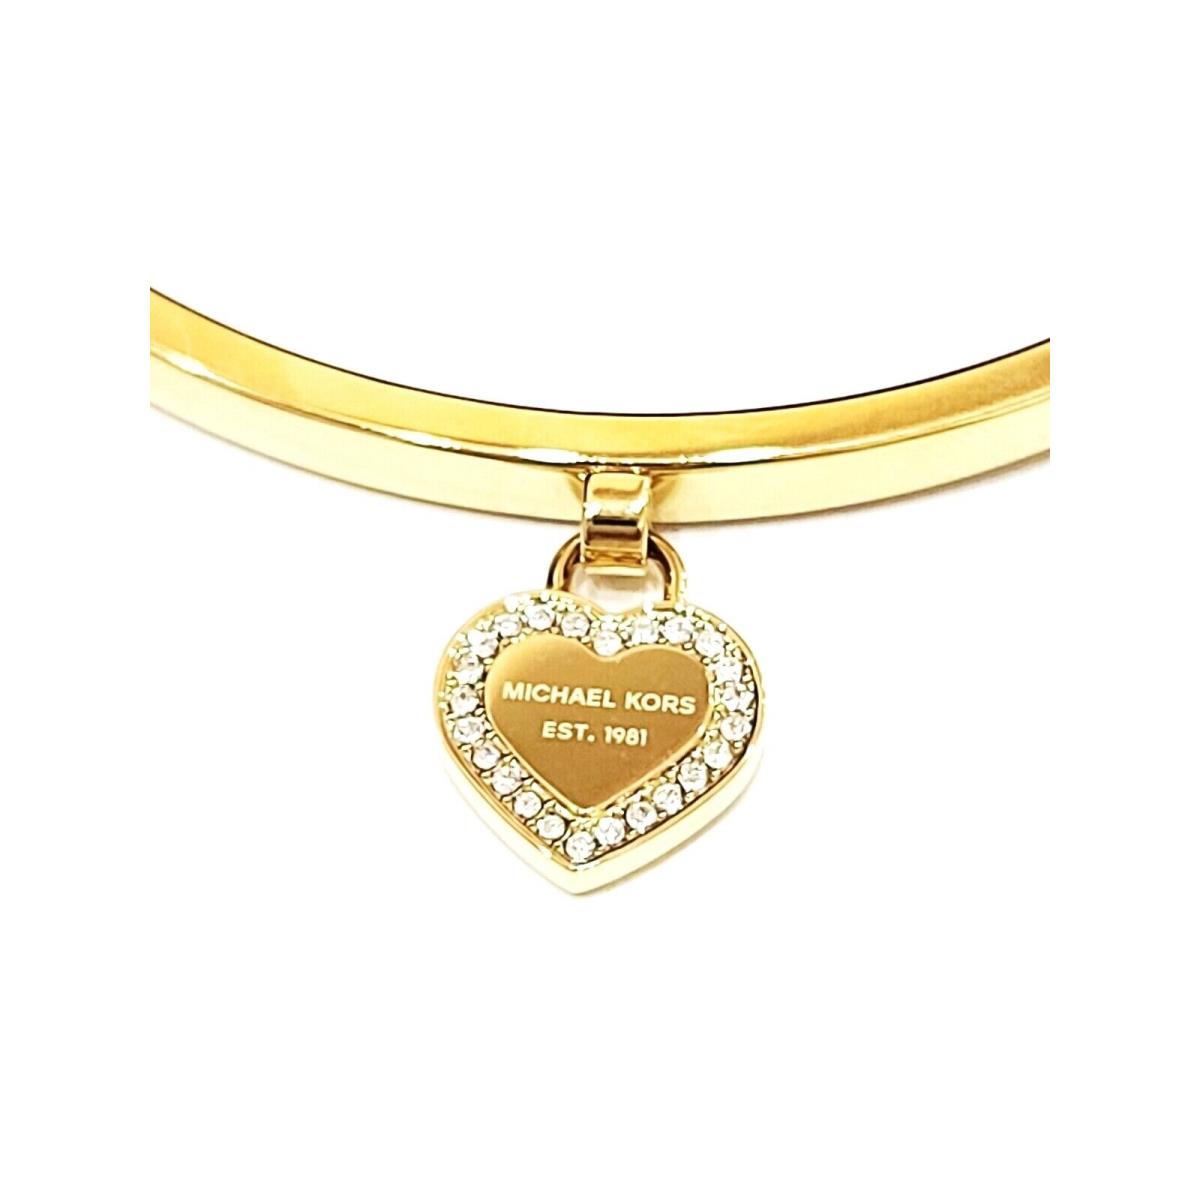 Michael Kors Brand Gold Logo Pave Heart Charm Bangle Bracelet